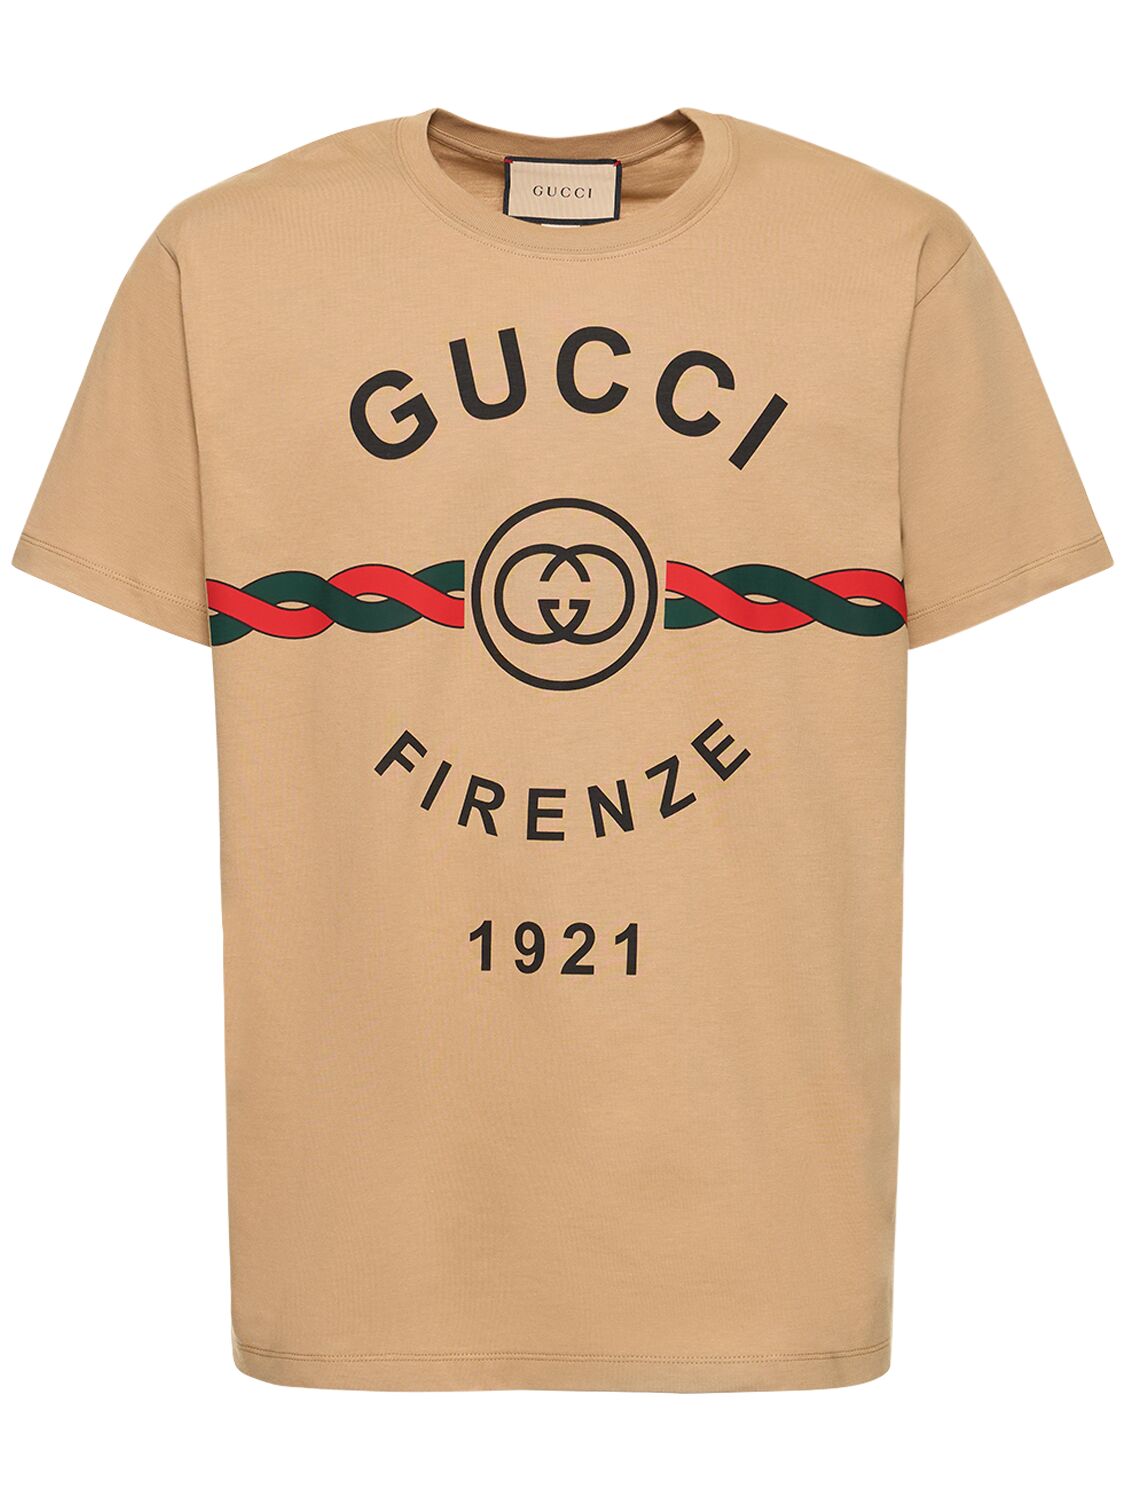 The North Face X Gucci Cream Logo Printed Cotton Oversized T-Shirt M Gucci